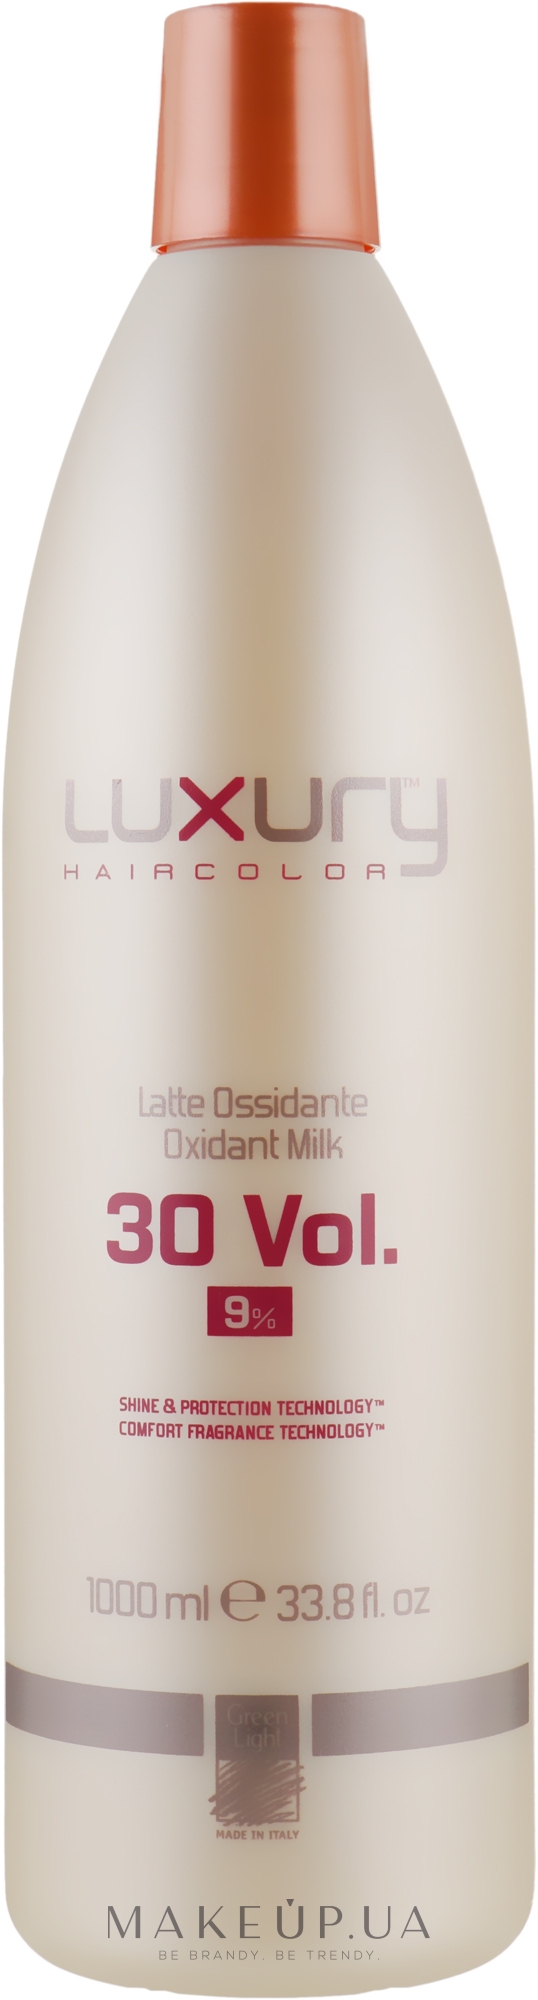 Молочный Оксидант - Green Light Luxury Haircolor Oxidant Milk 9% 30 vol. — фото 1000ml